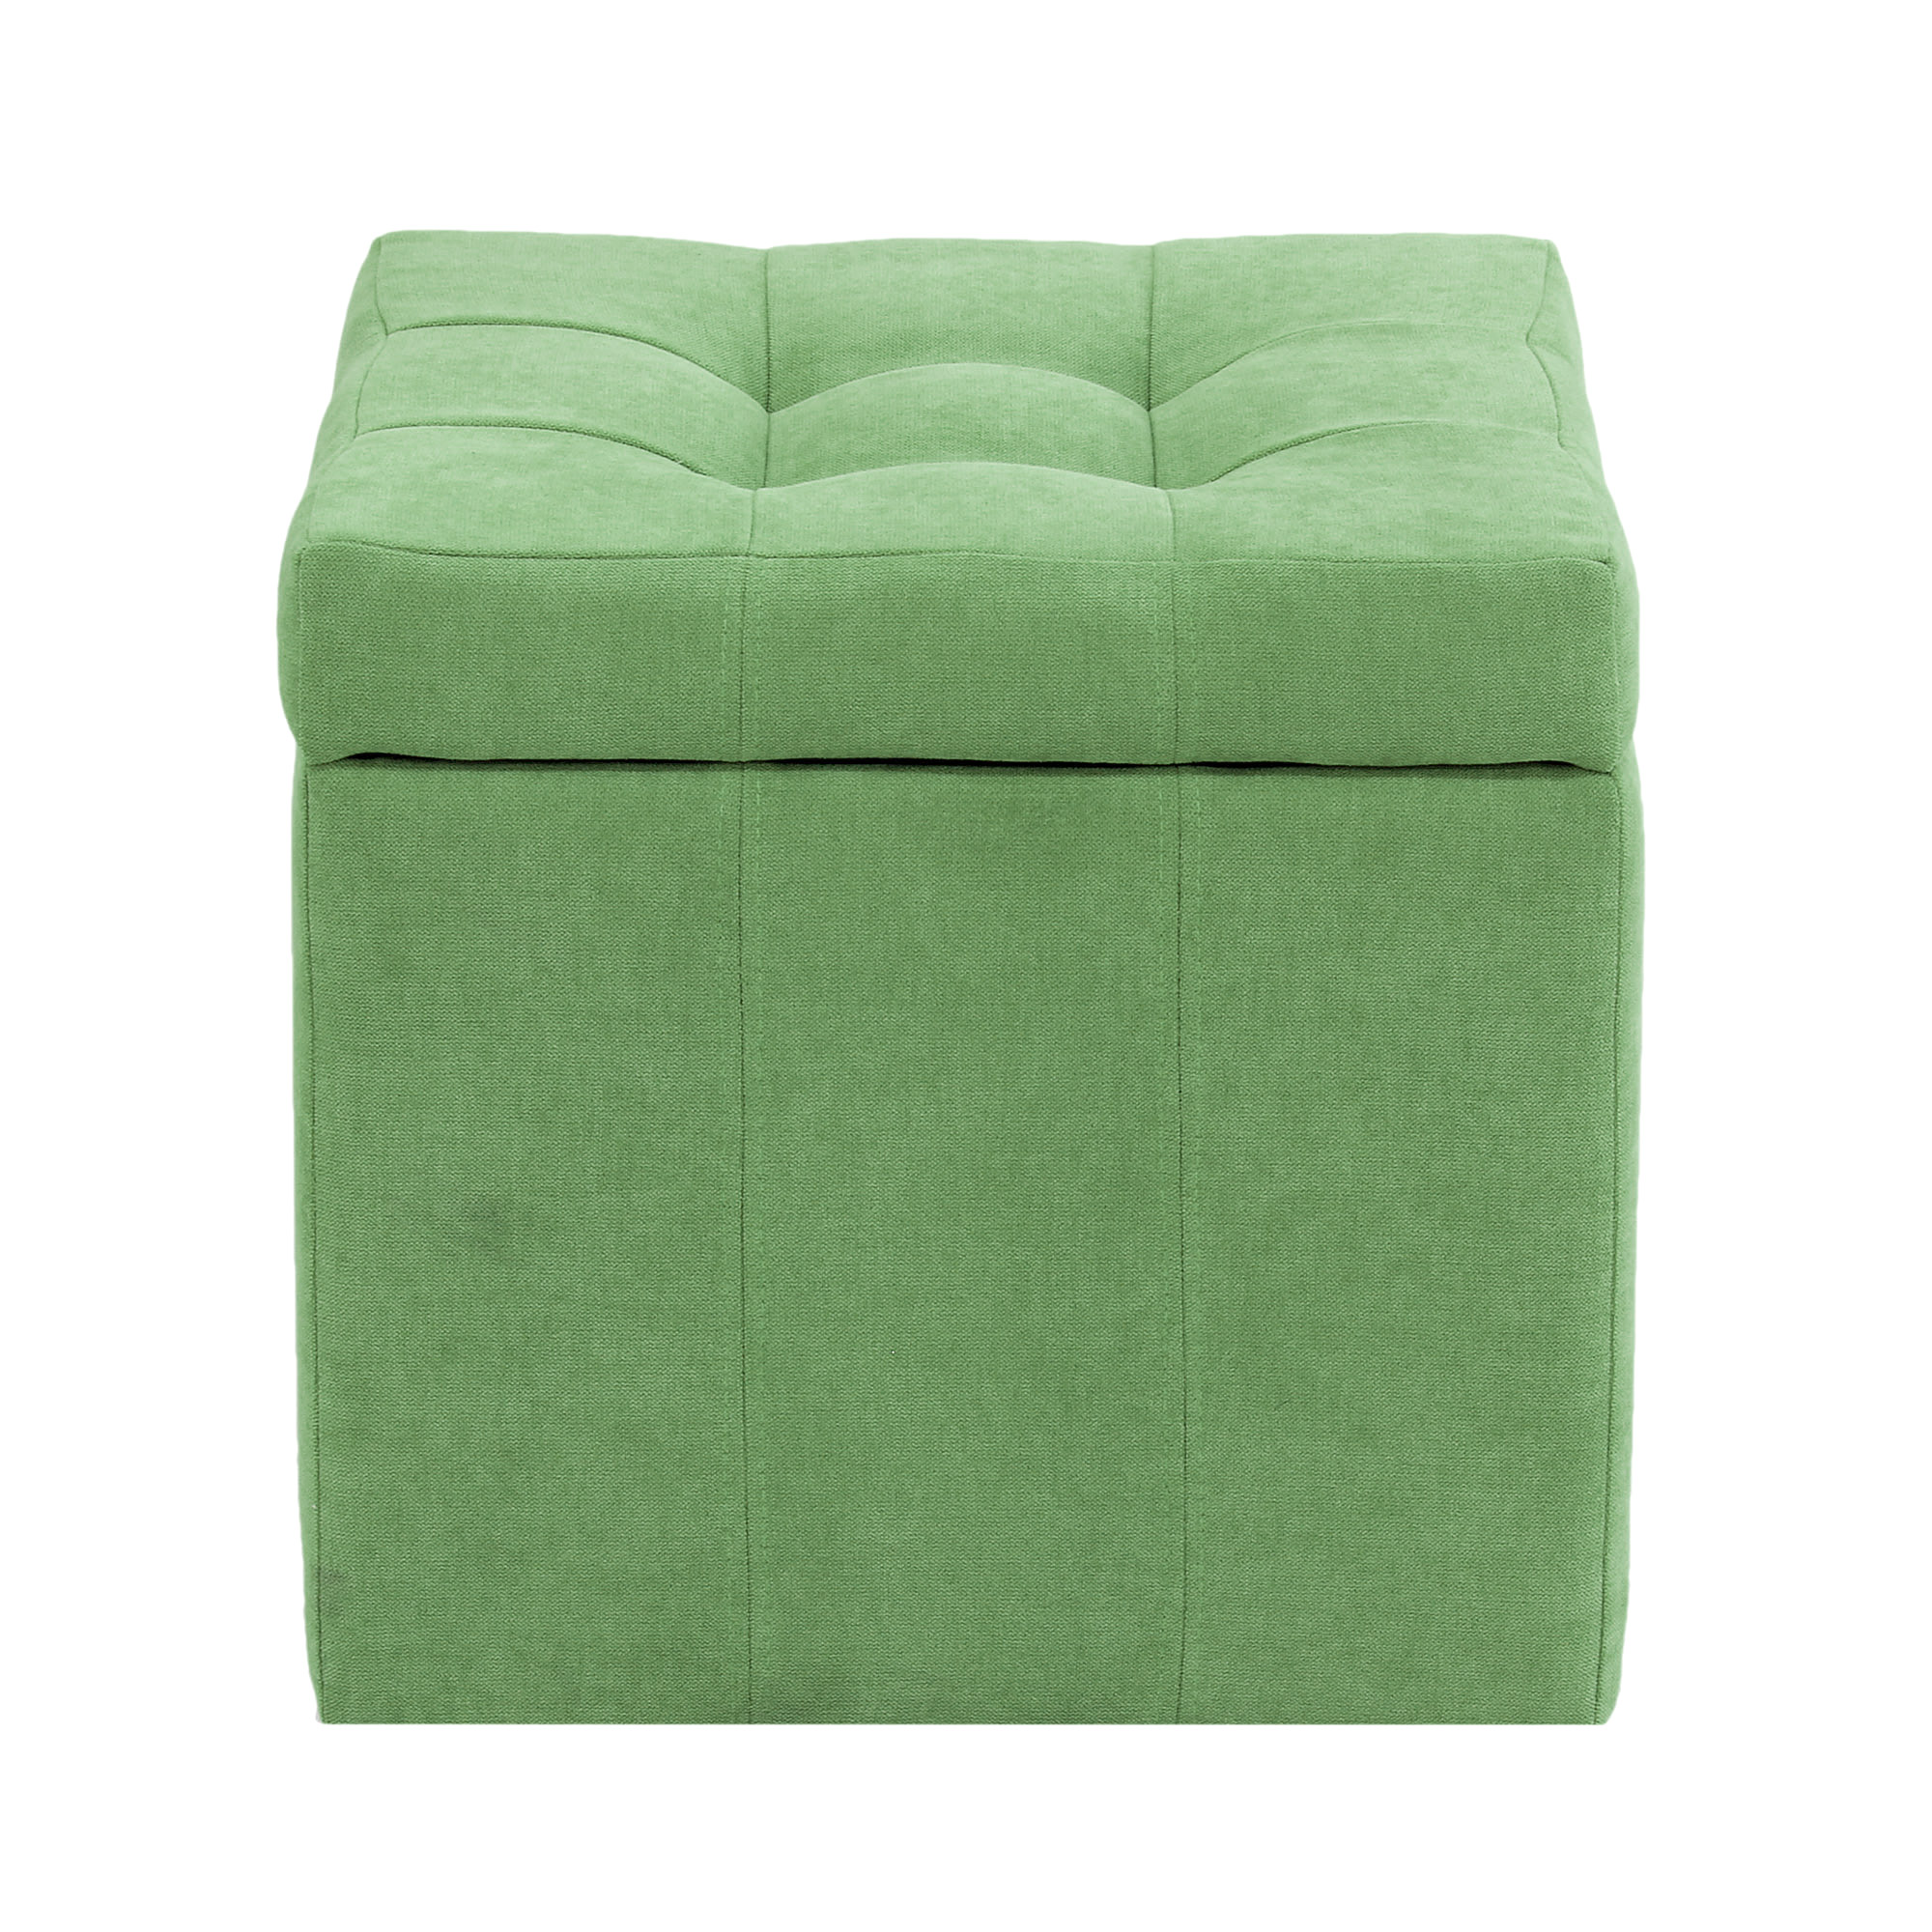 Банкетка Dreambag модерна зеленый велюр 46х46х46, размер 46х46х46 см - фото 2